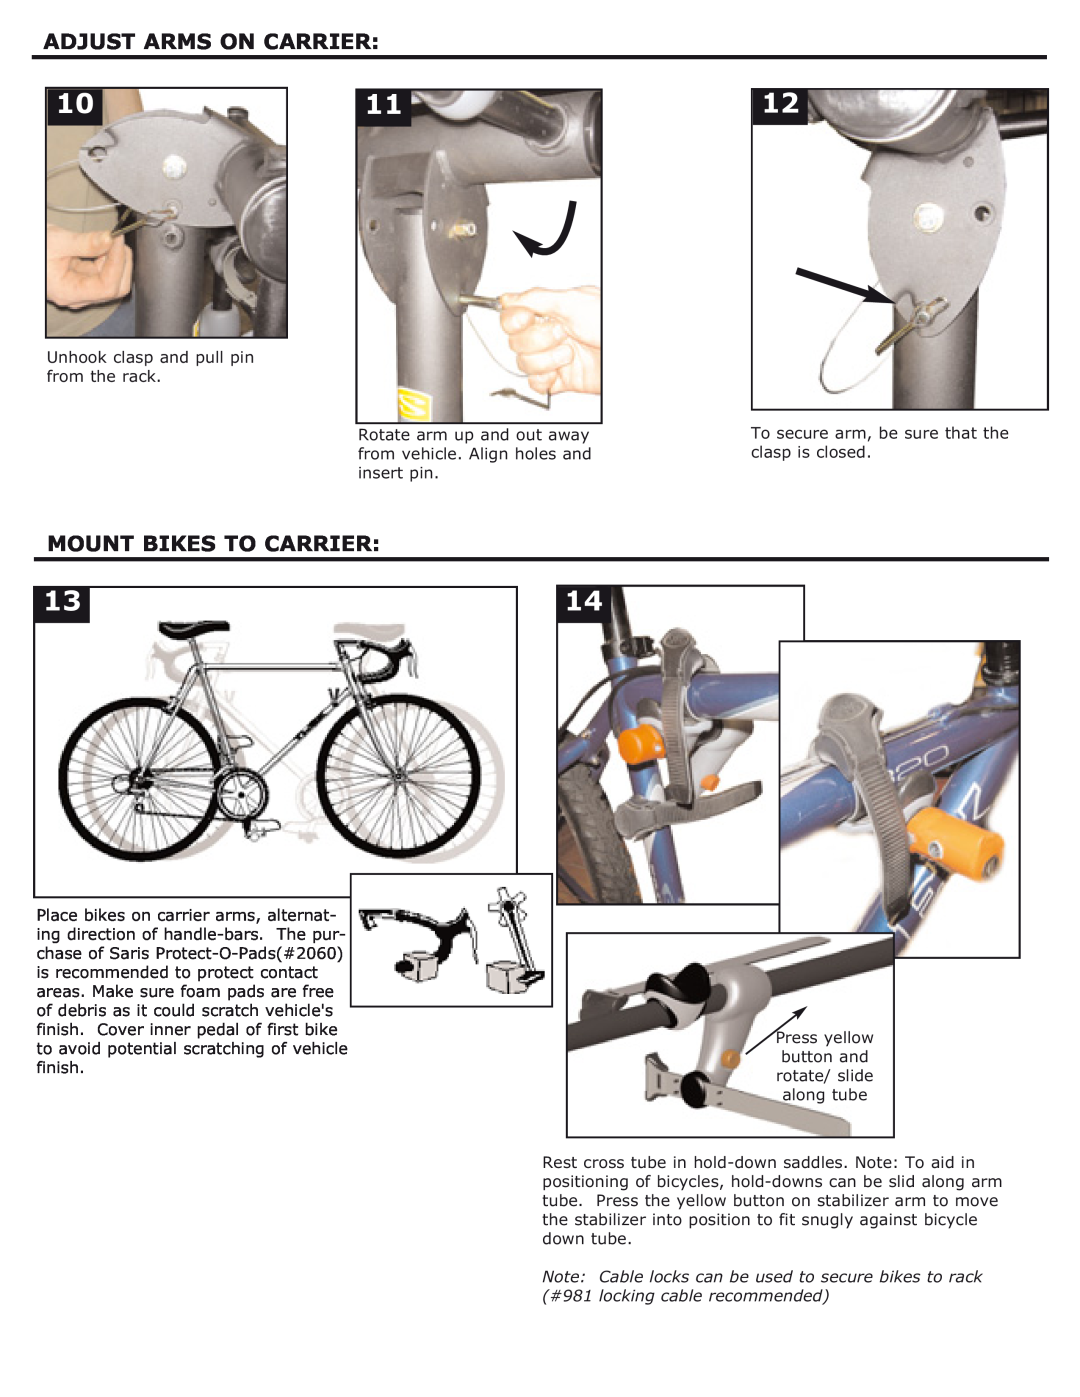 Saris 4 bike, 2 bike manual Adjust Arms On Carrier, Mount Bikes To Carrier 